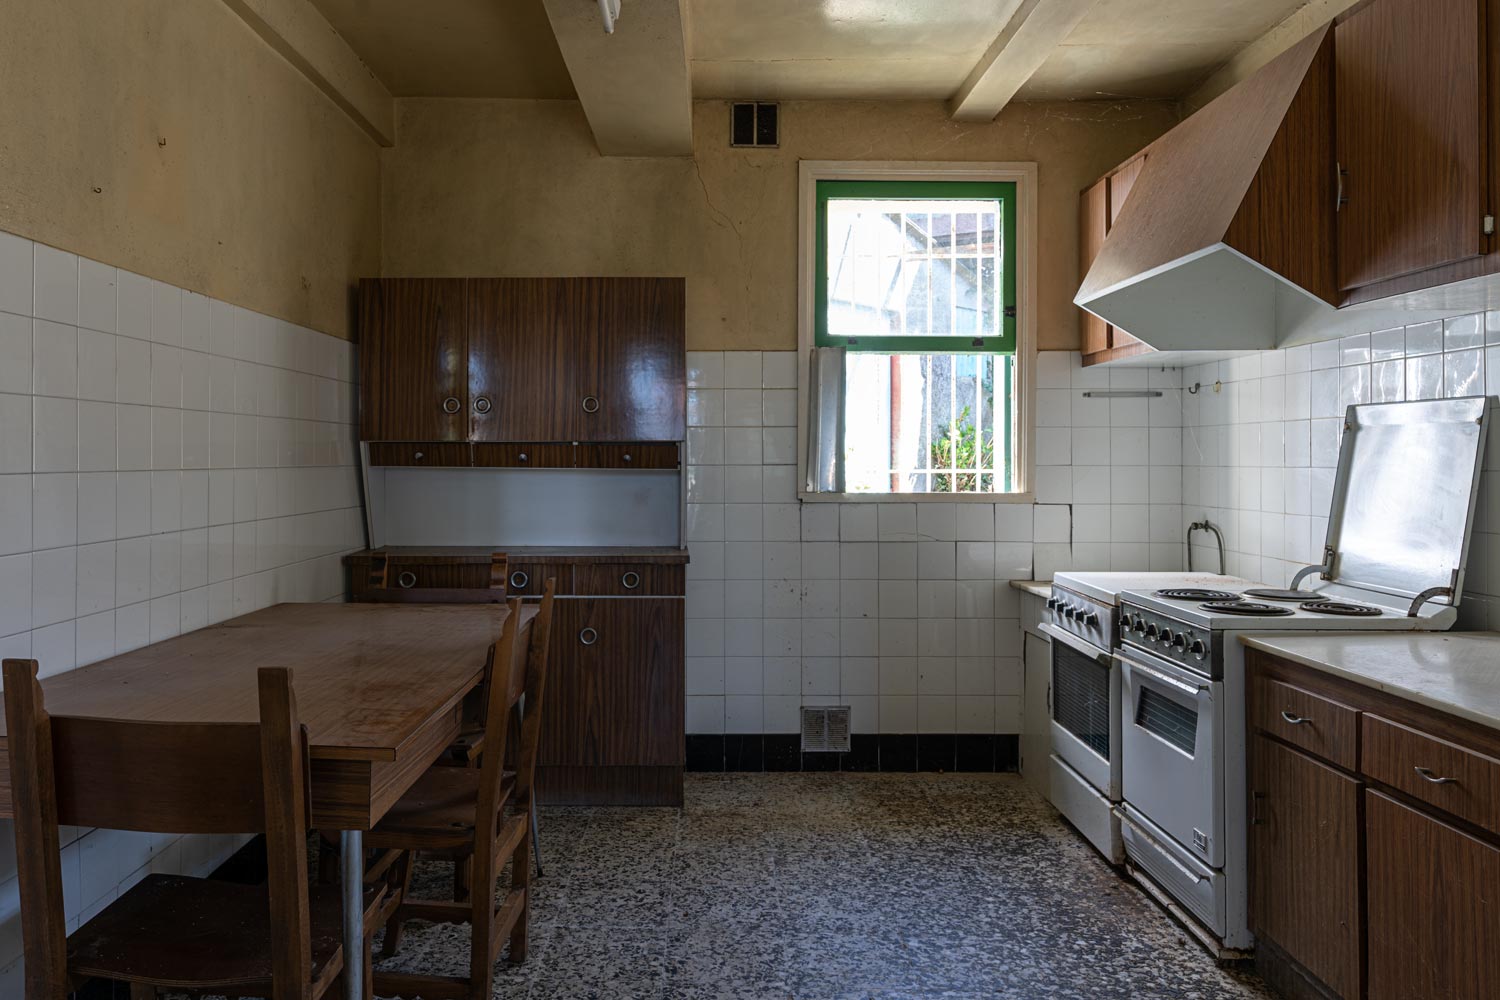 Cocina casa para reformar en Bergondo con carpinterías verdes